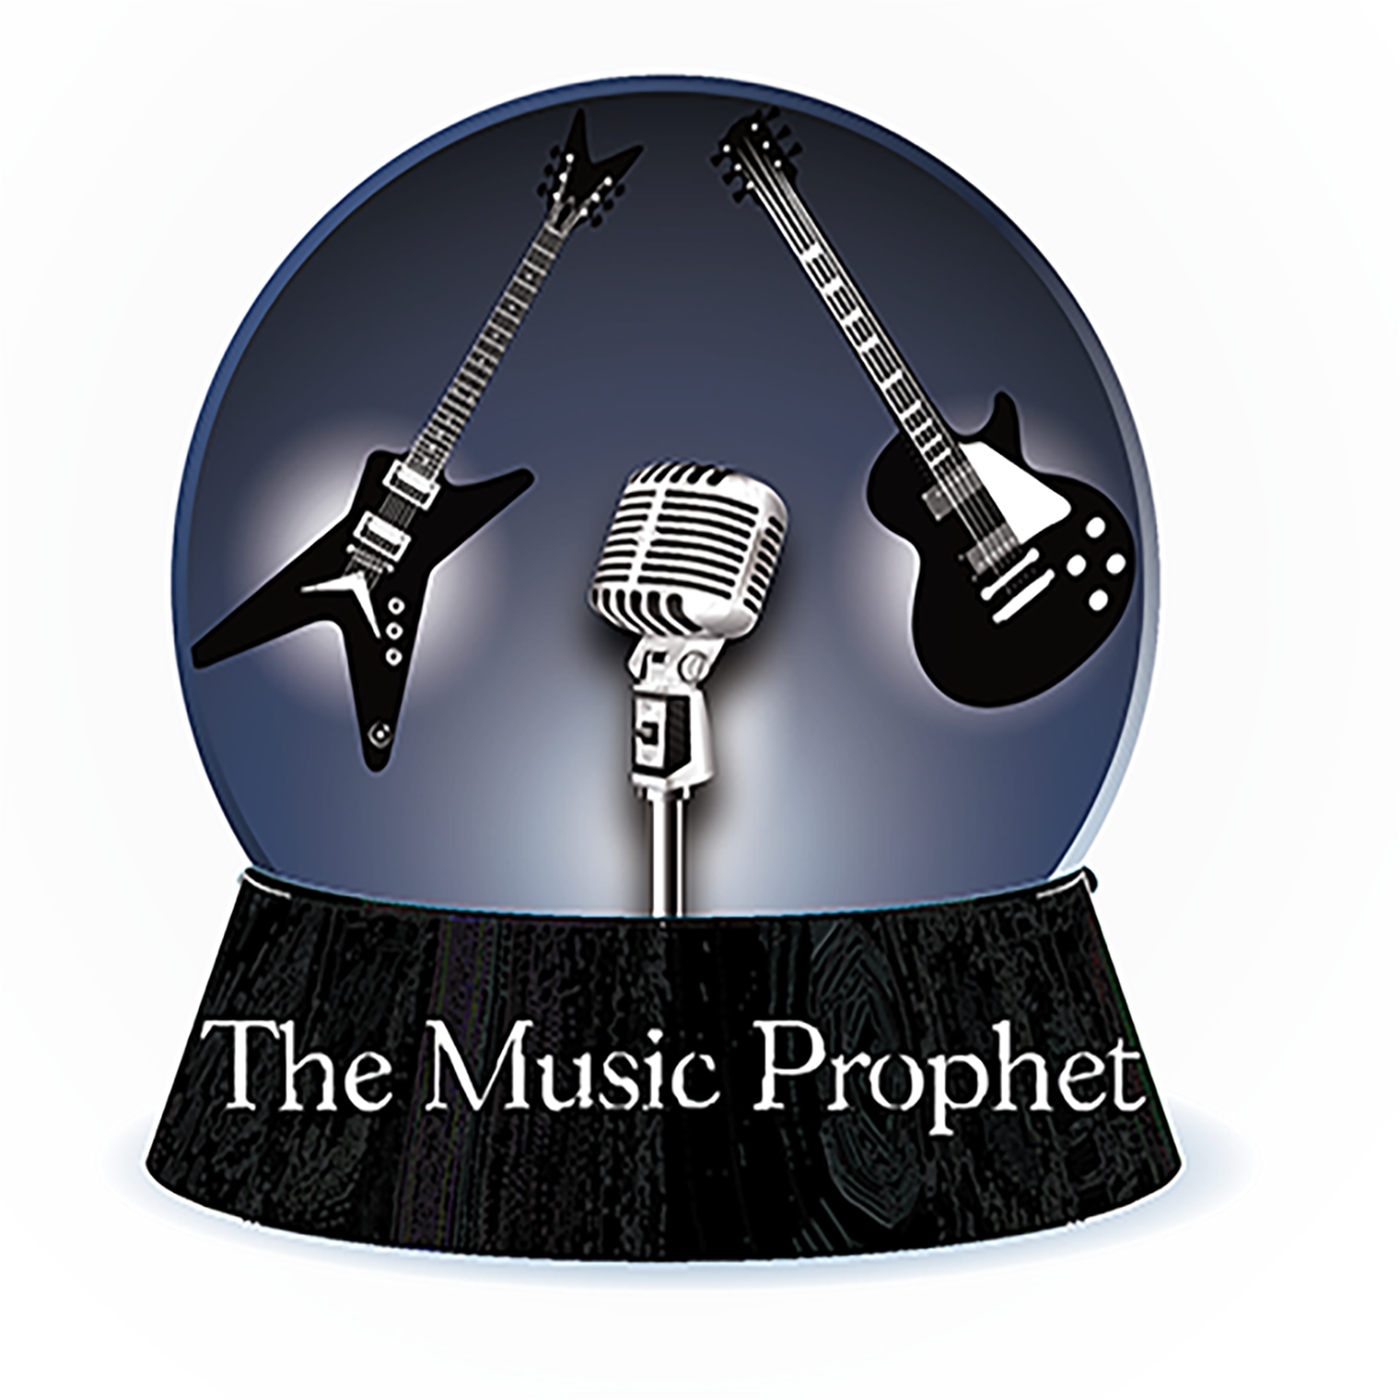 The Music Prophet